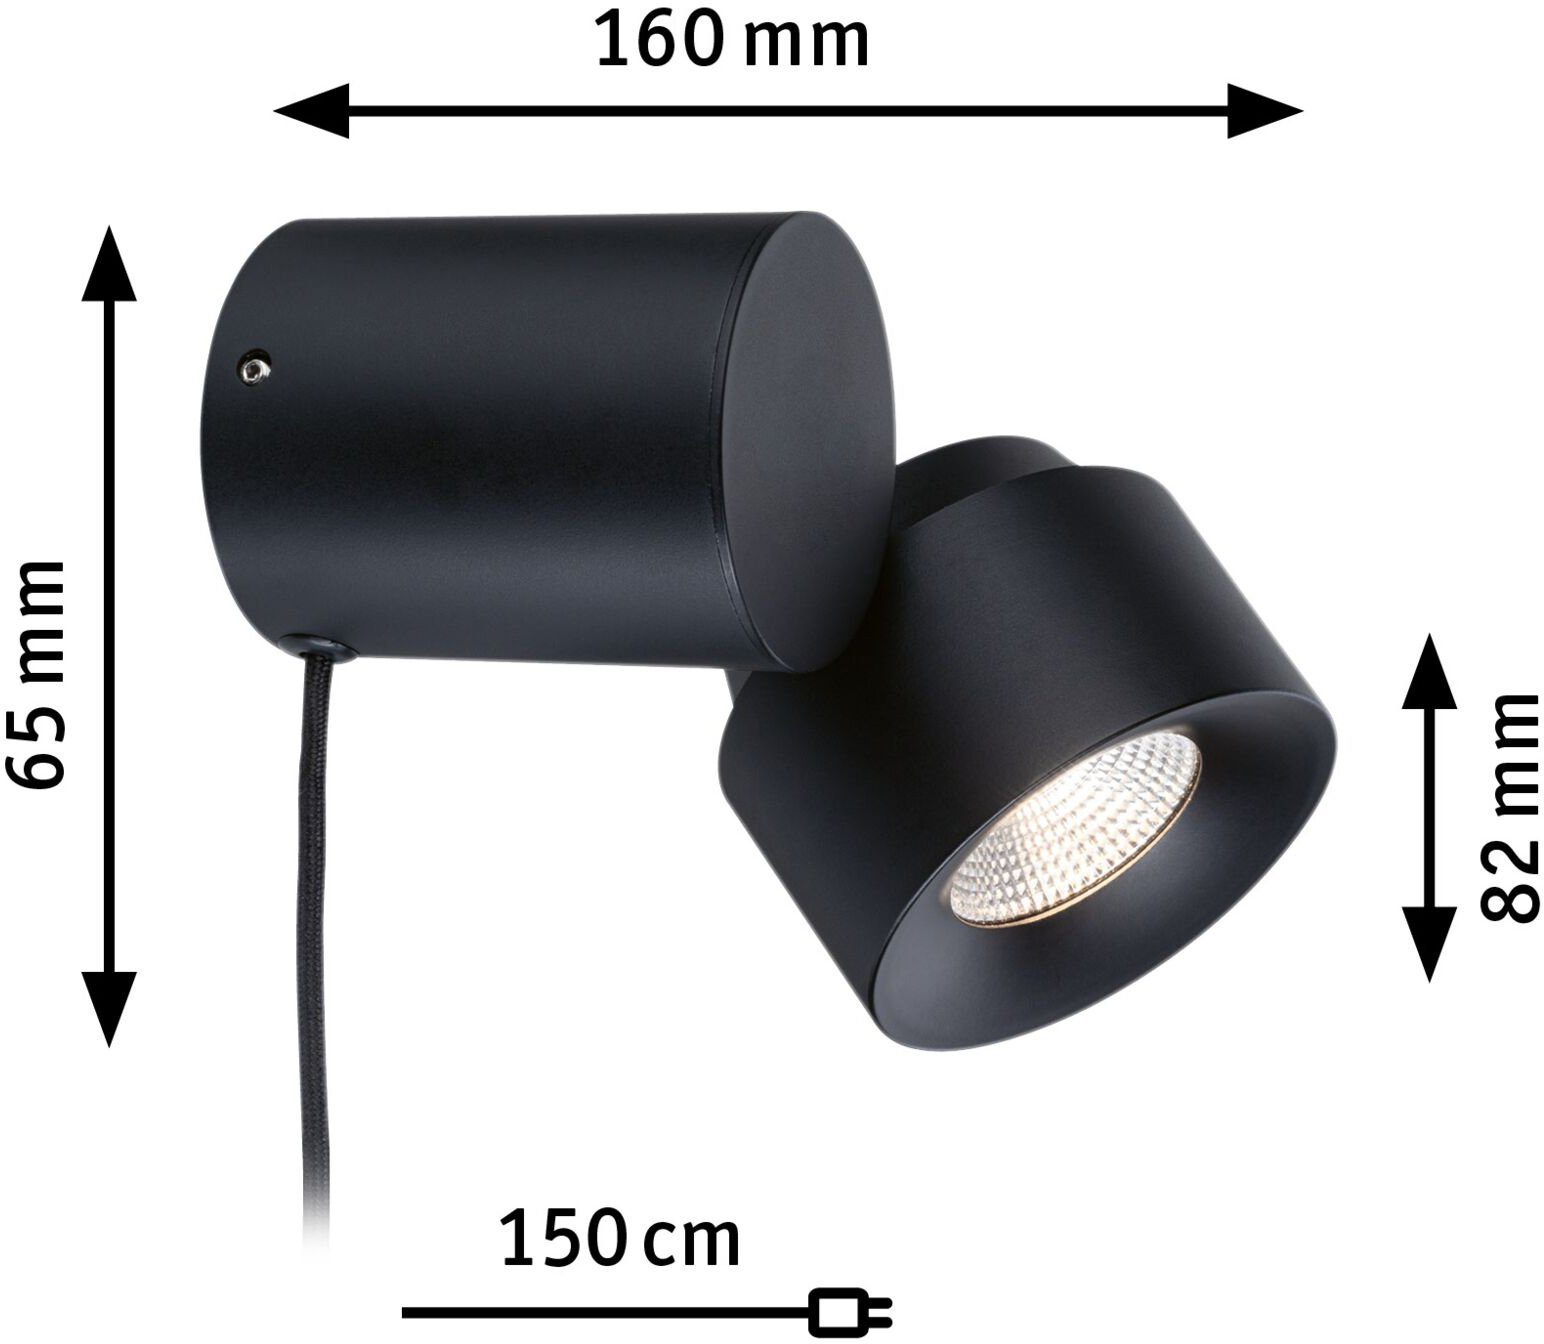 fest LED, Warmweiß, integriert, Paulmann Pane, Puric Metall dimmbar, Schwarz/Grau, LED Tischleuchte